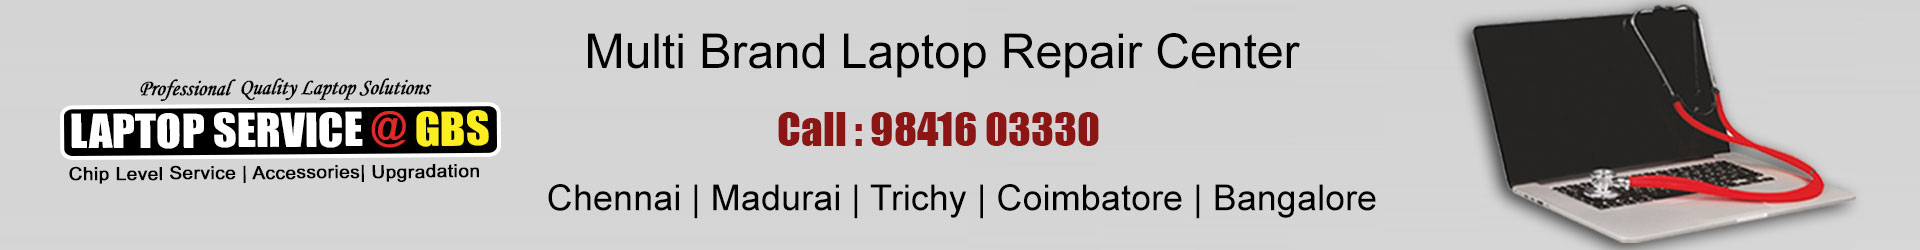 laptop service center in kk nagar chennai